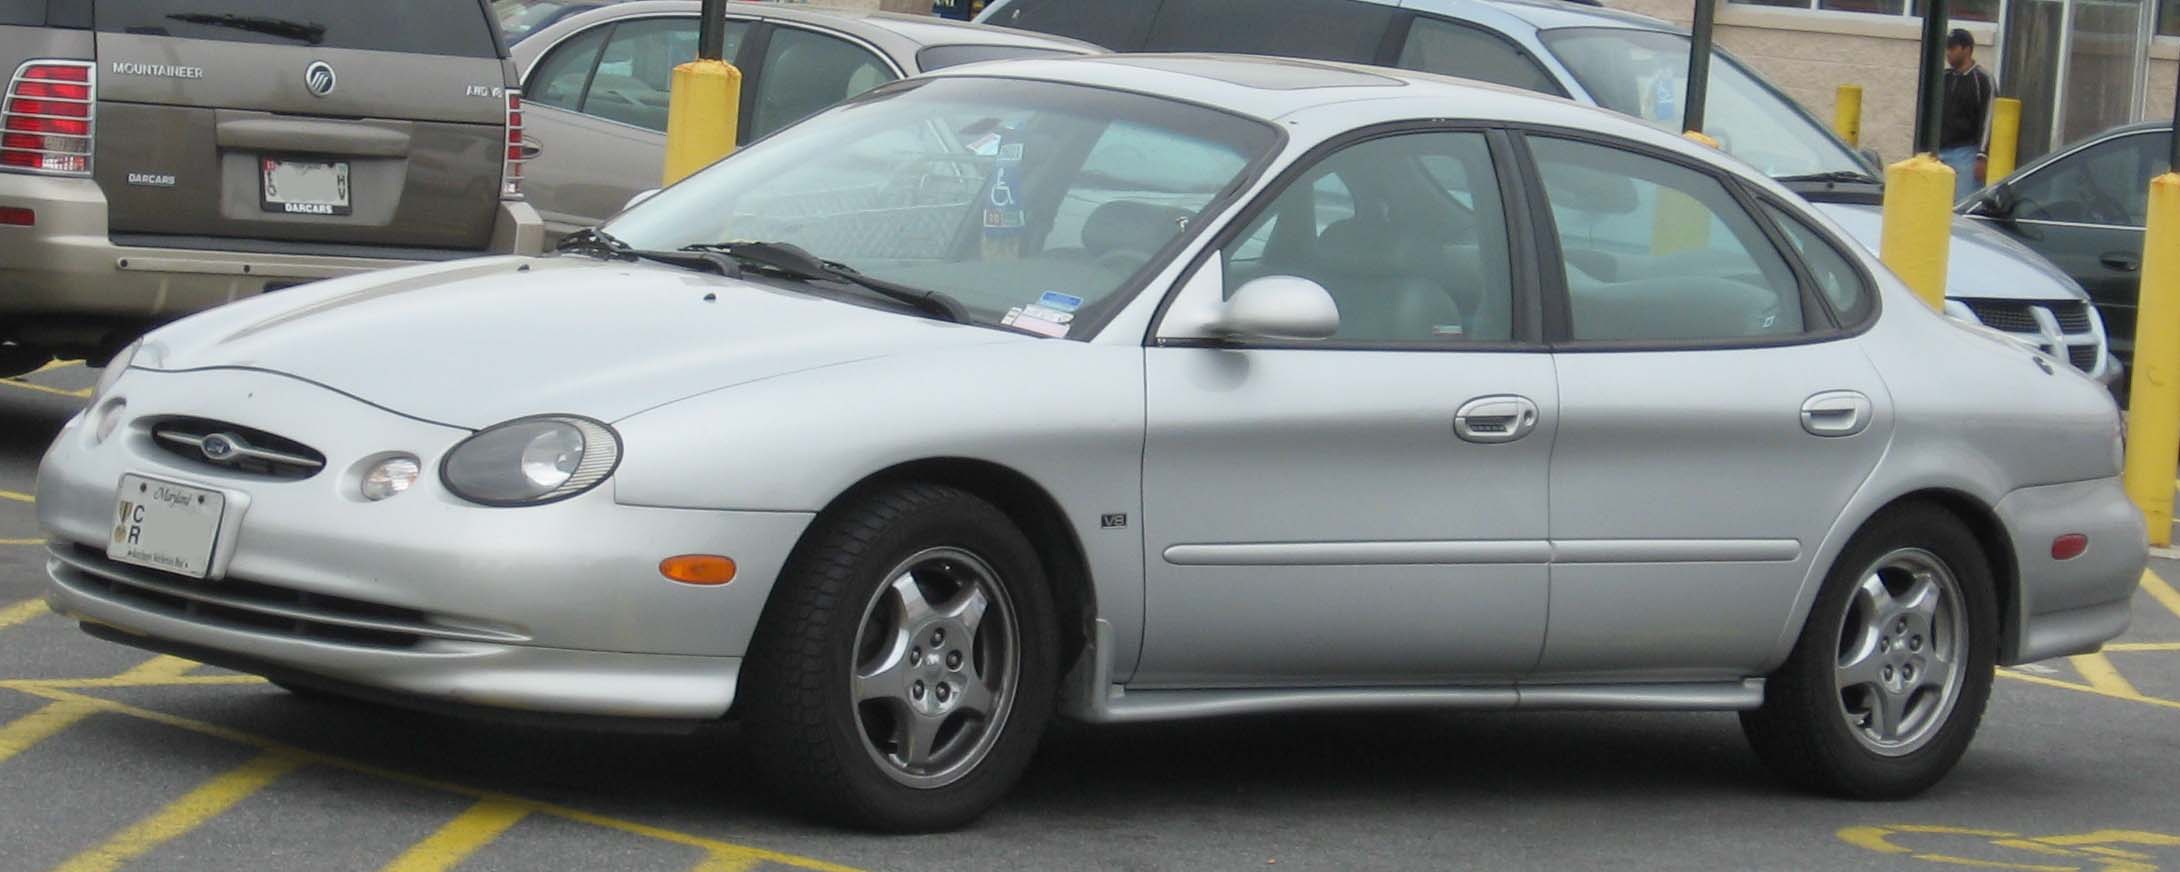 1999 Ford tuarus #2